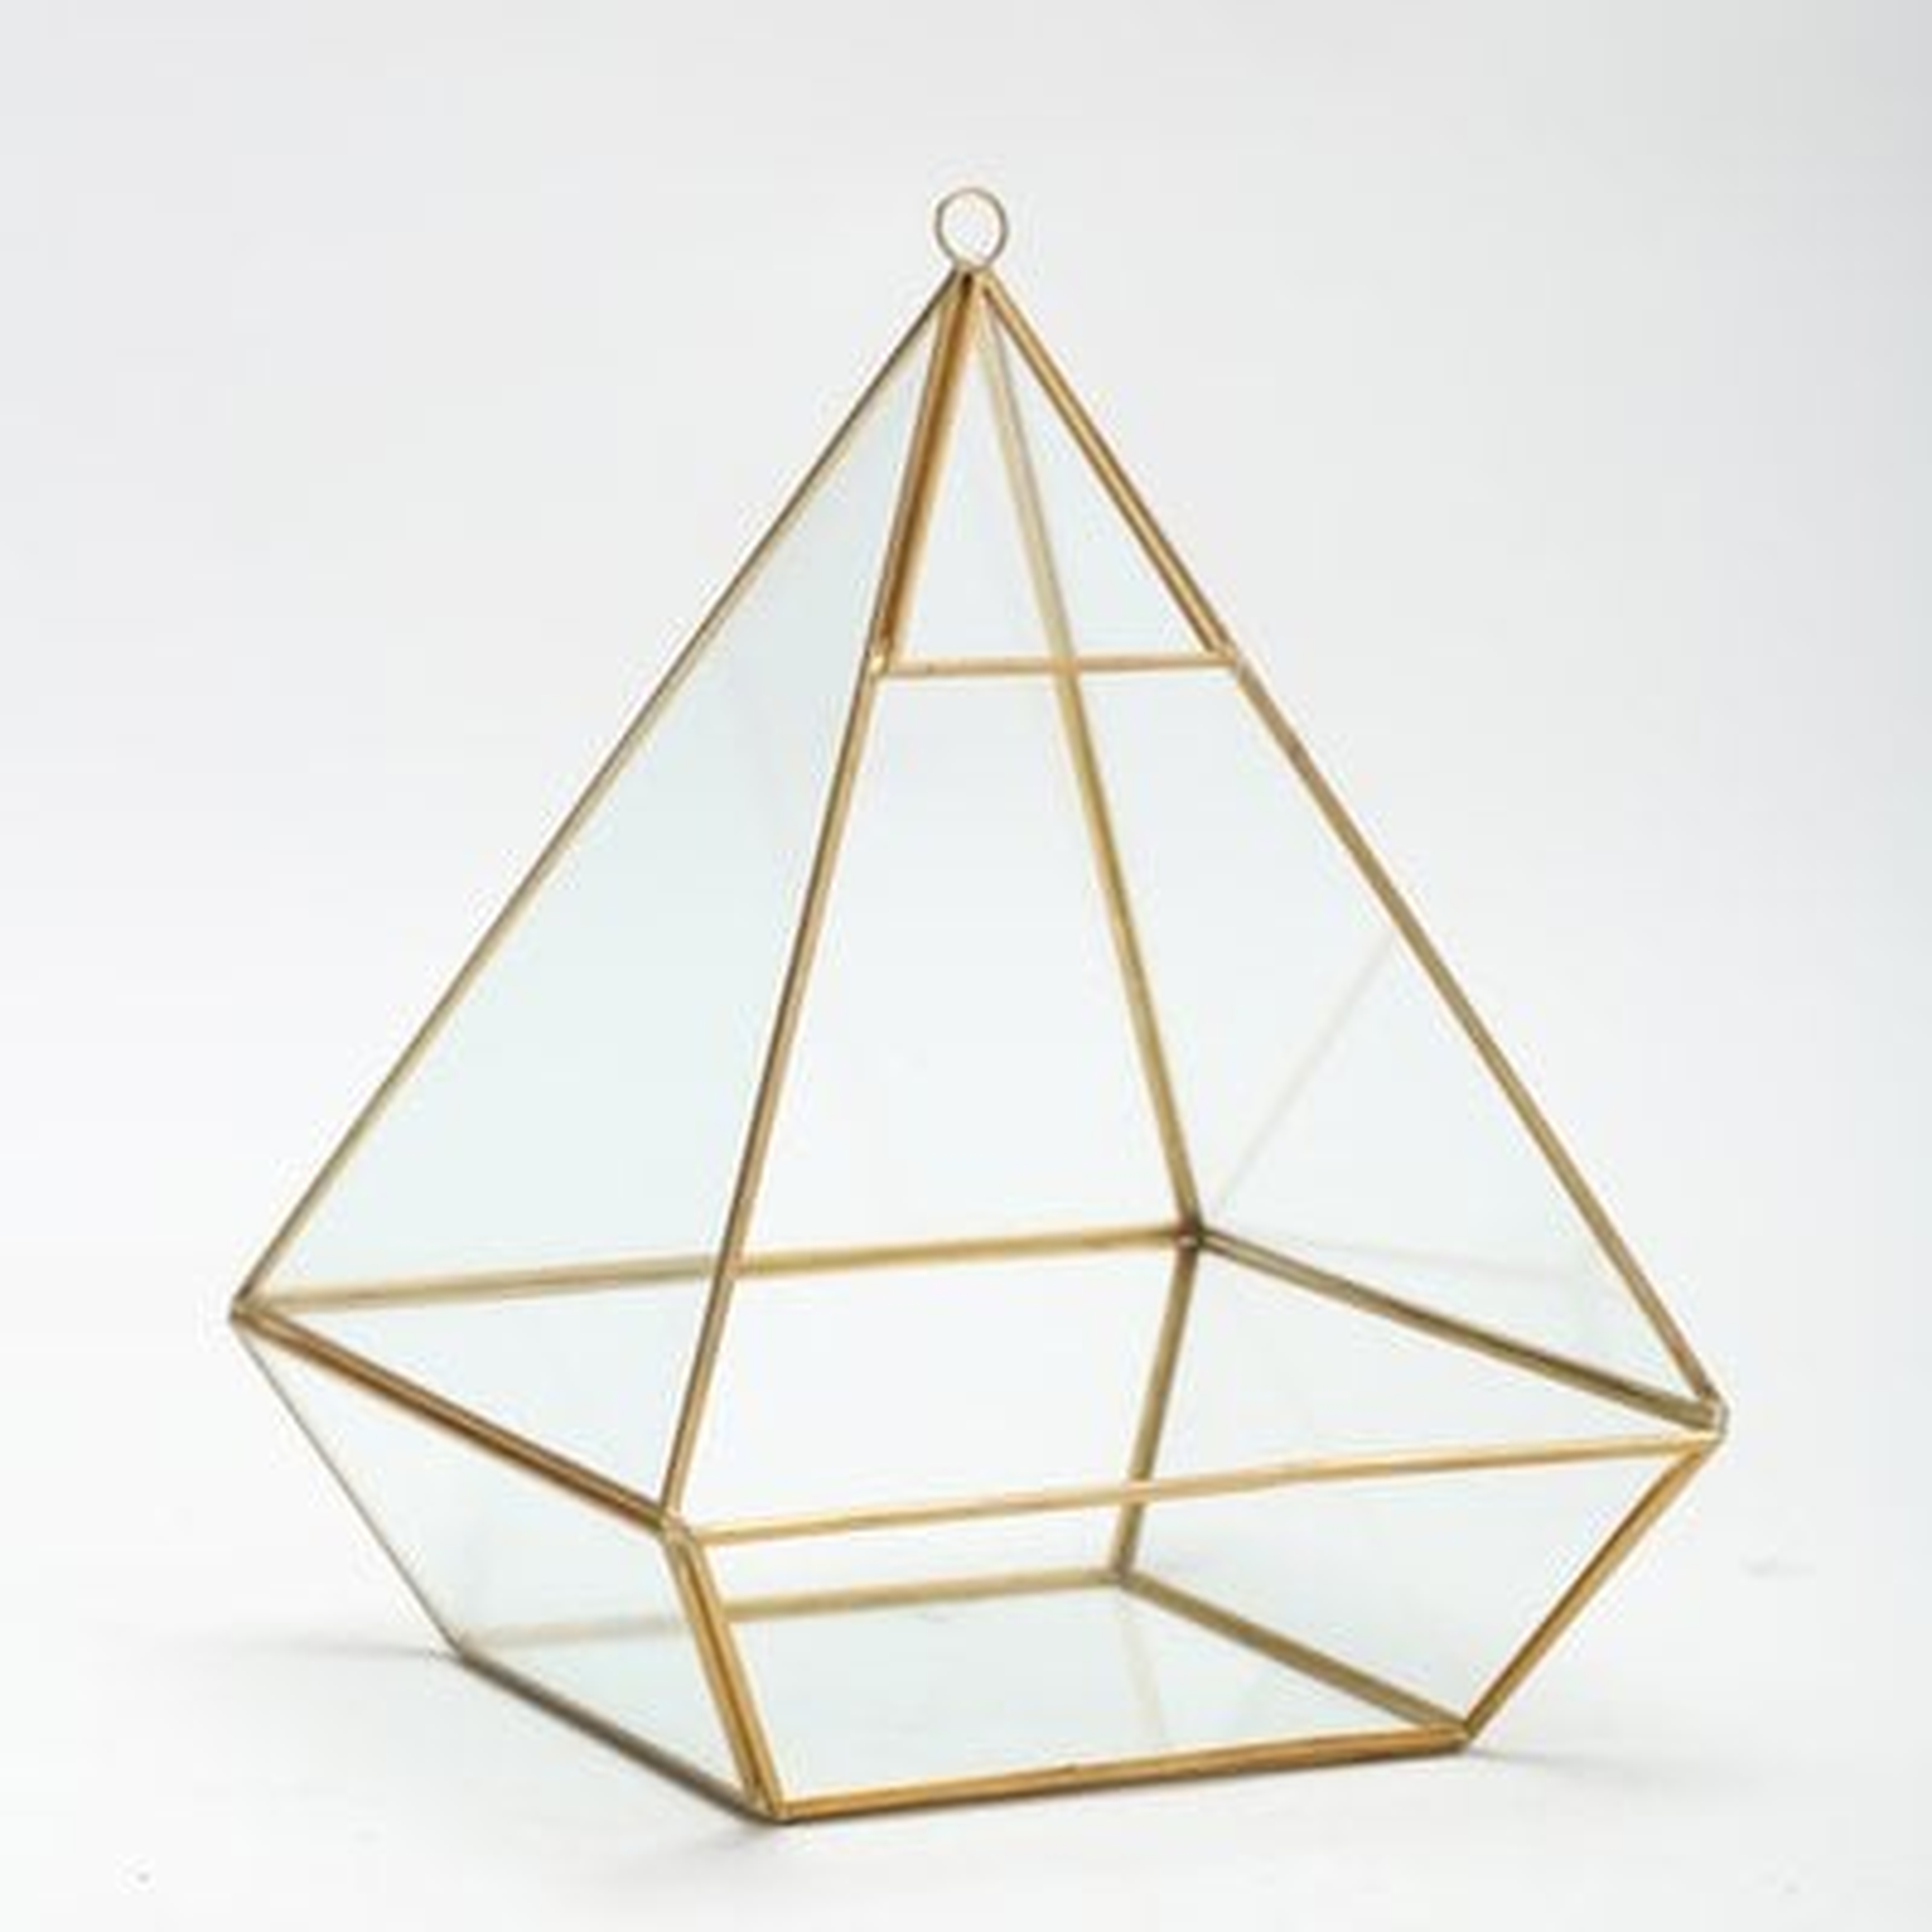 Mangels Geometric Pyramid Terrarium Display - Wayfair